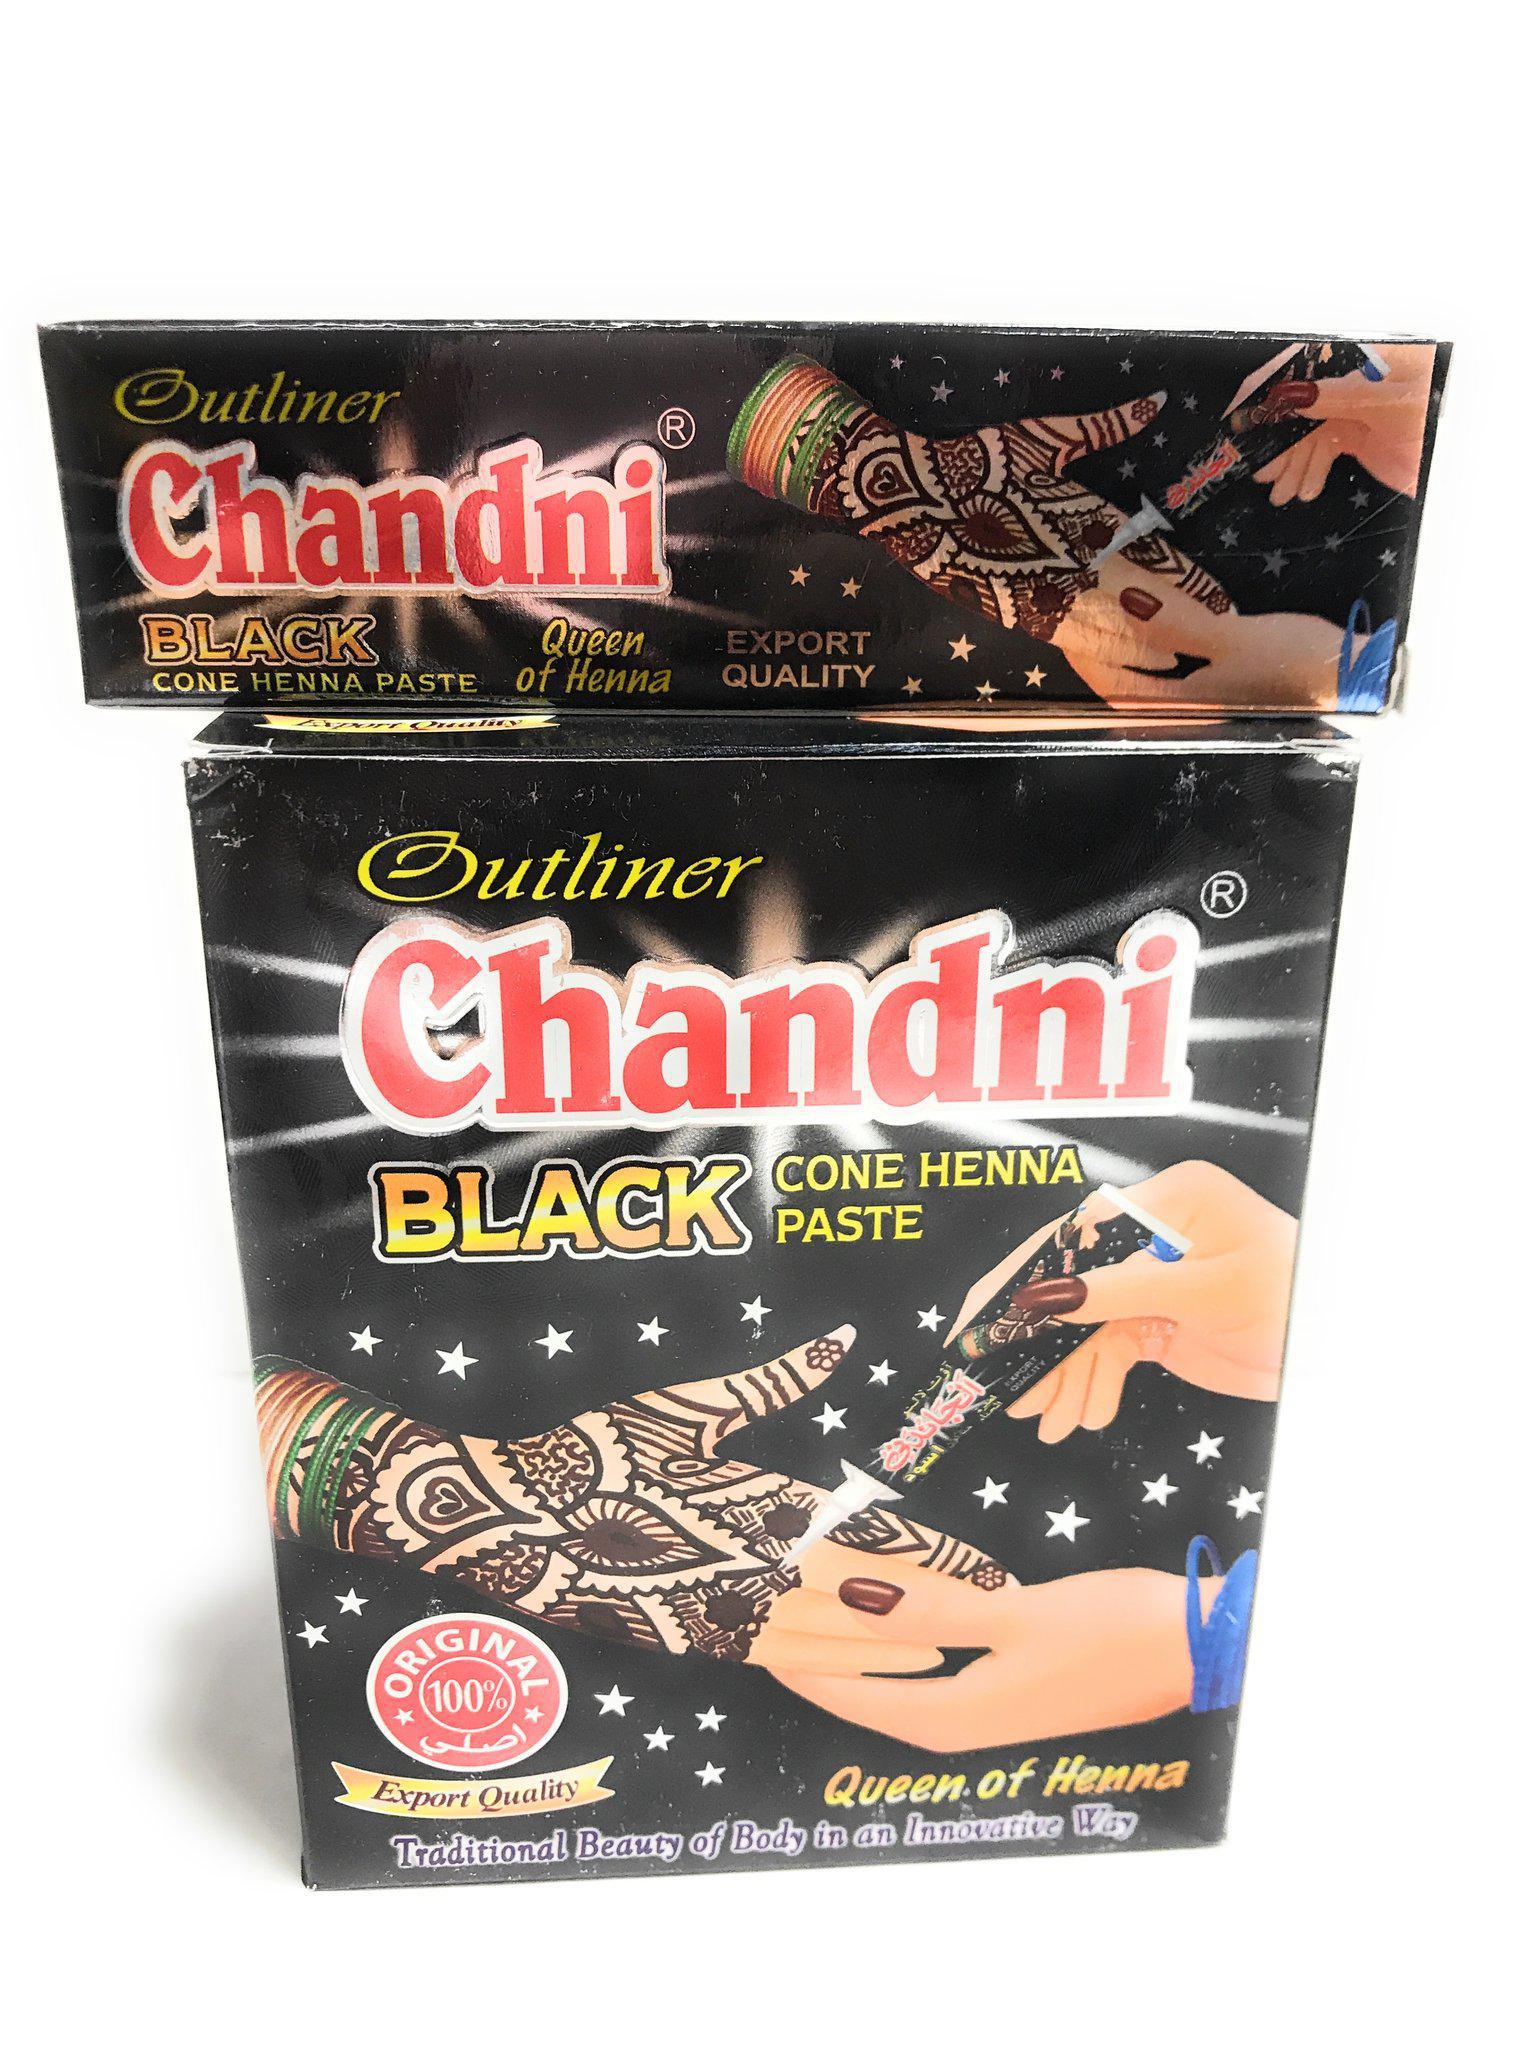 Chandi Black Cone Henna Paste